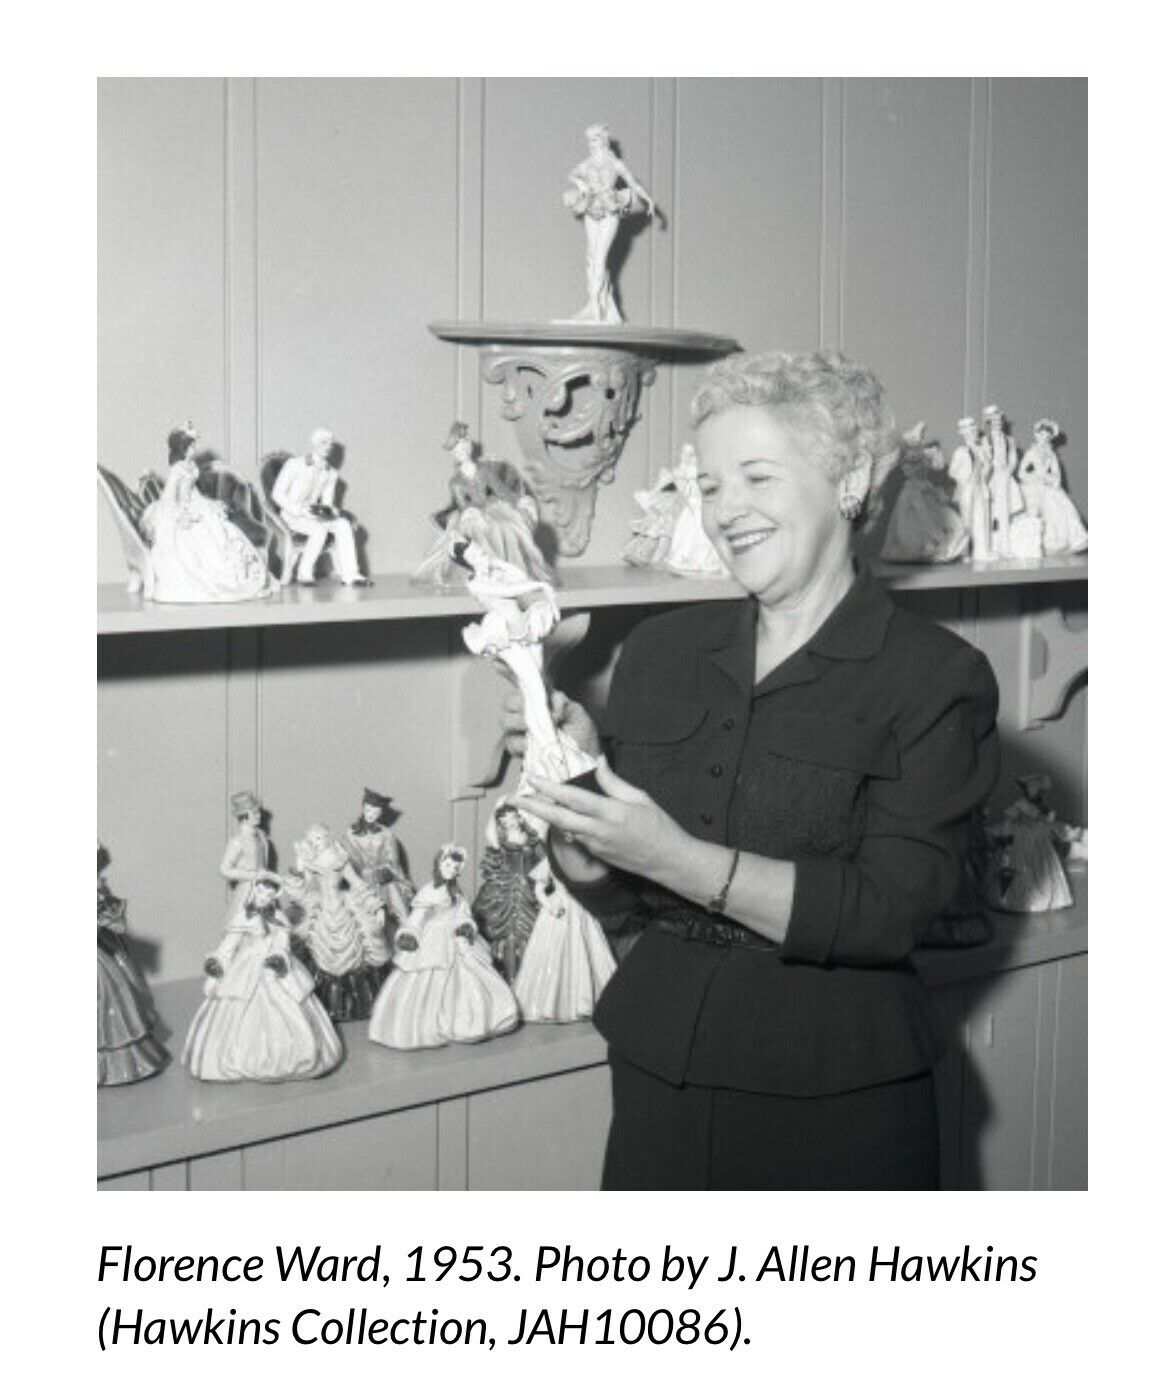 1953 photo of Florence Ward admiring porcelain doll.